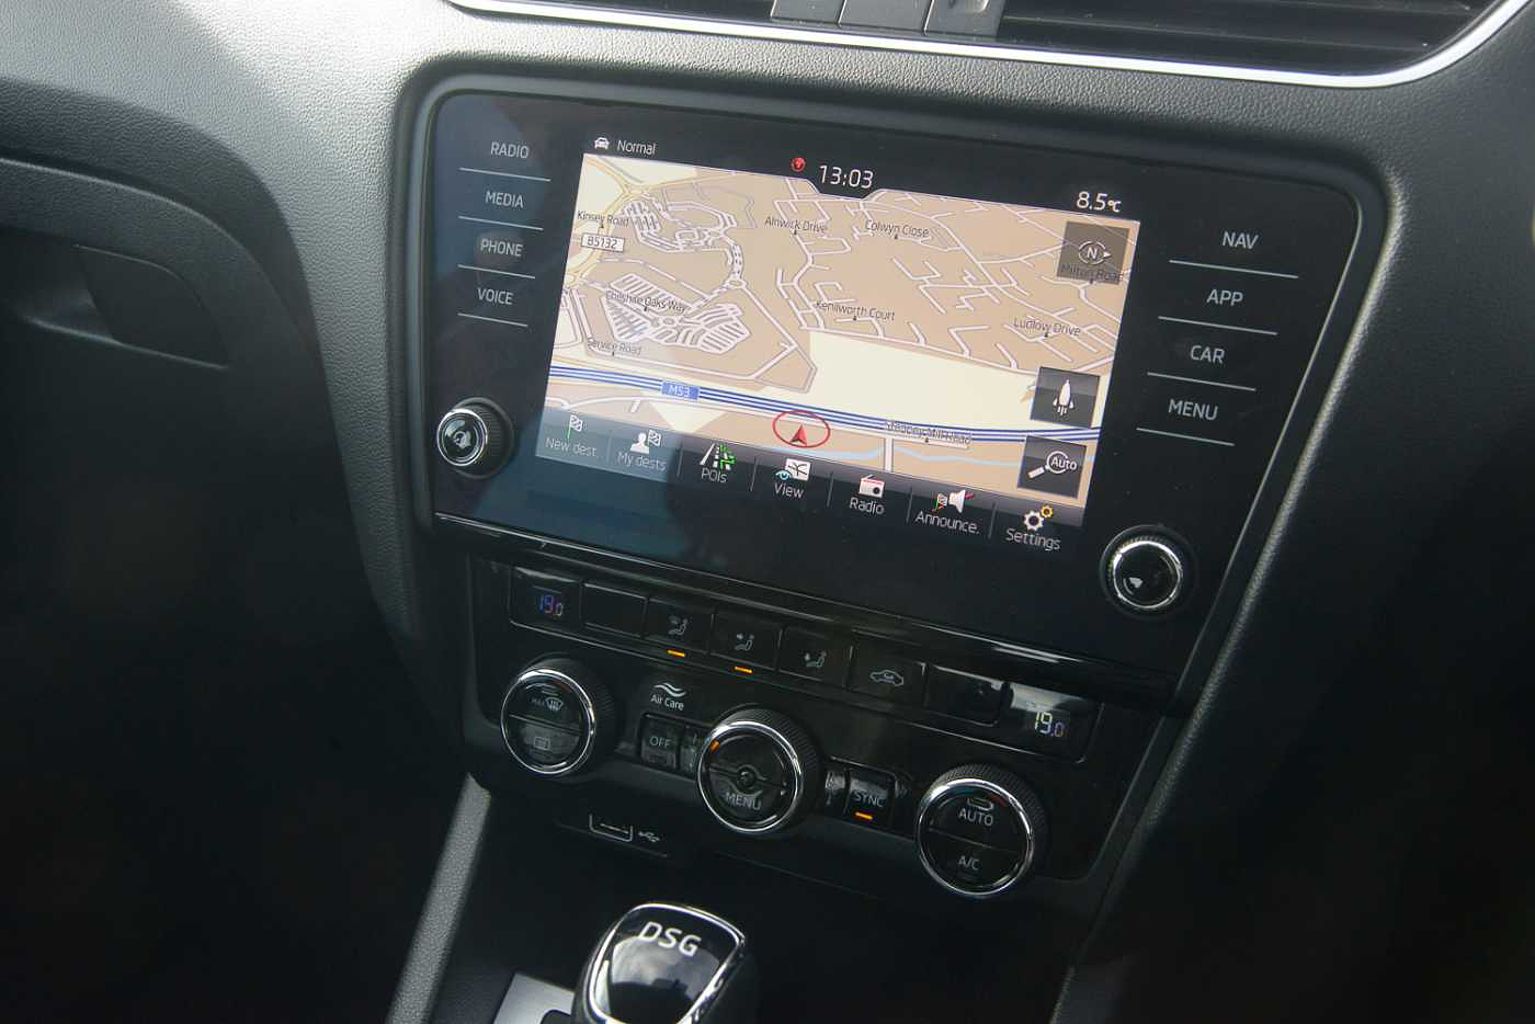 SKODA Octavia Hatchback 1.6 TDI SE Tech SCR 115ps DSG